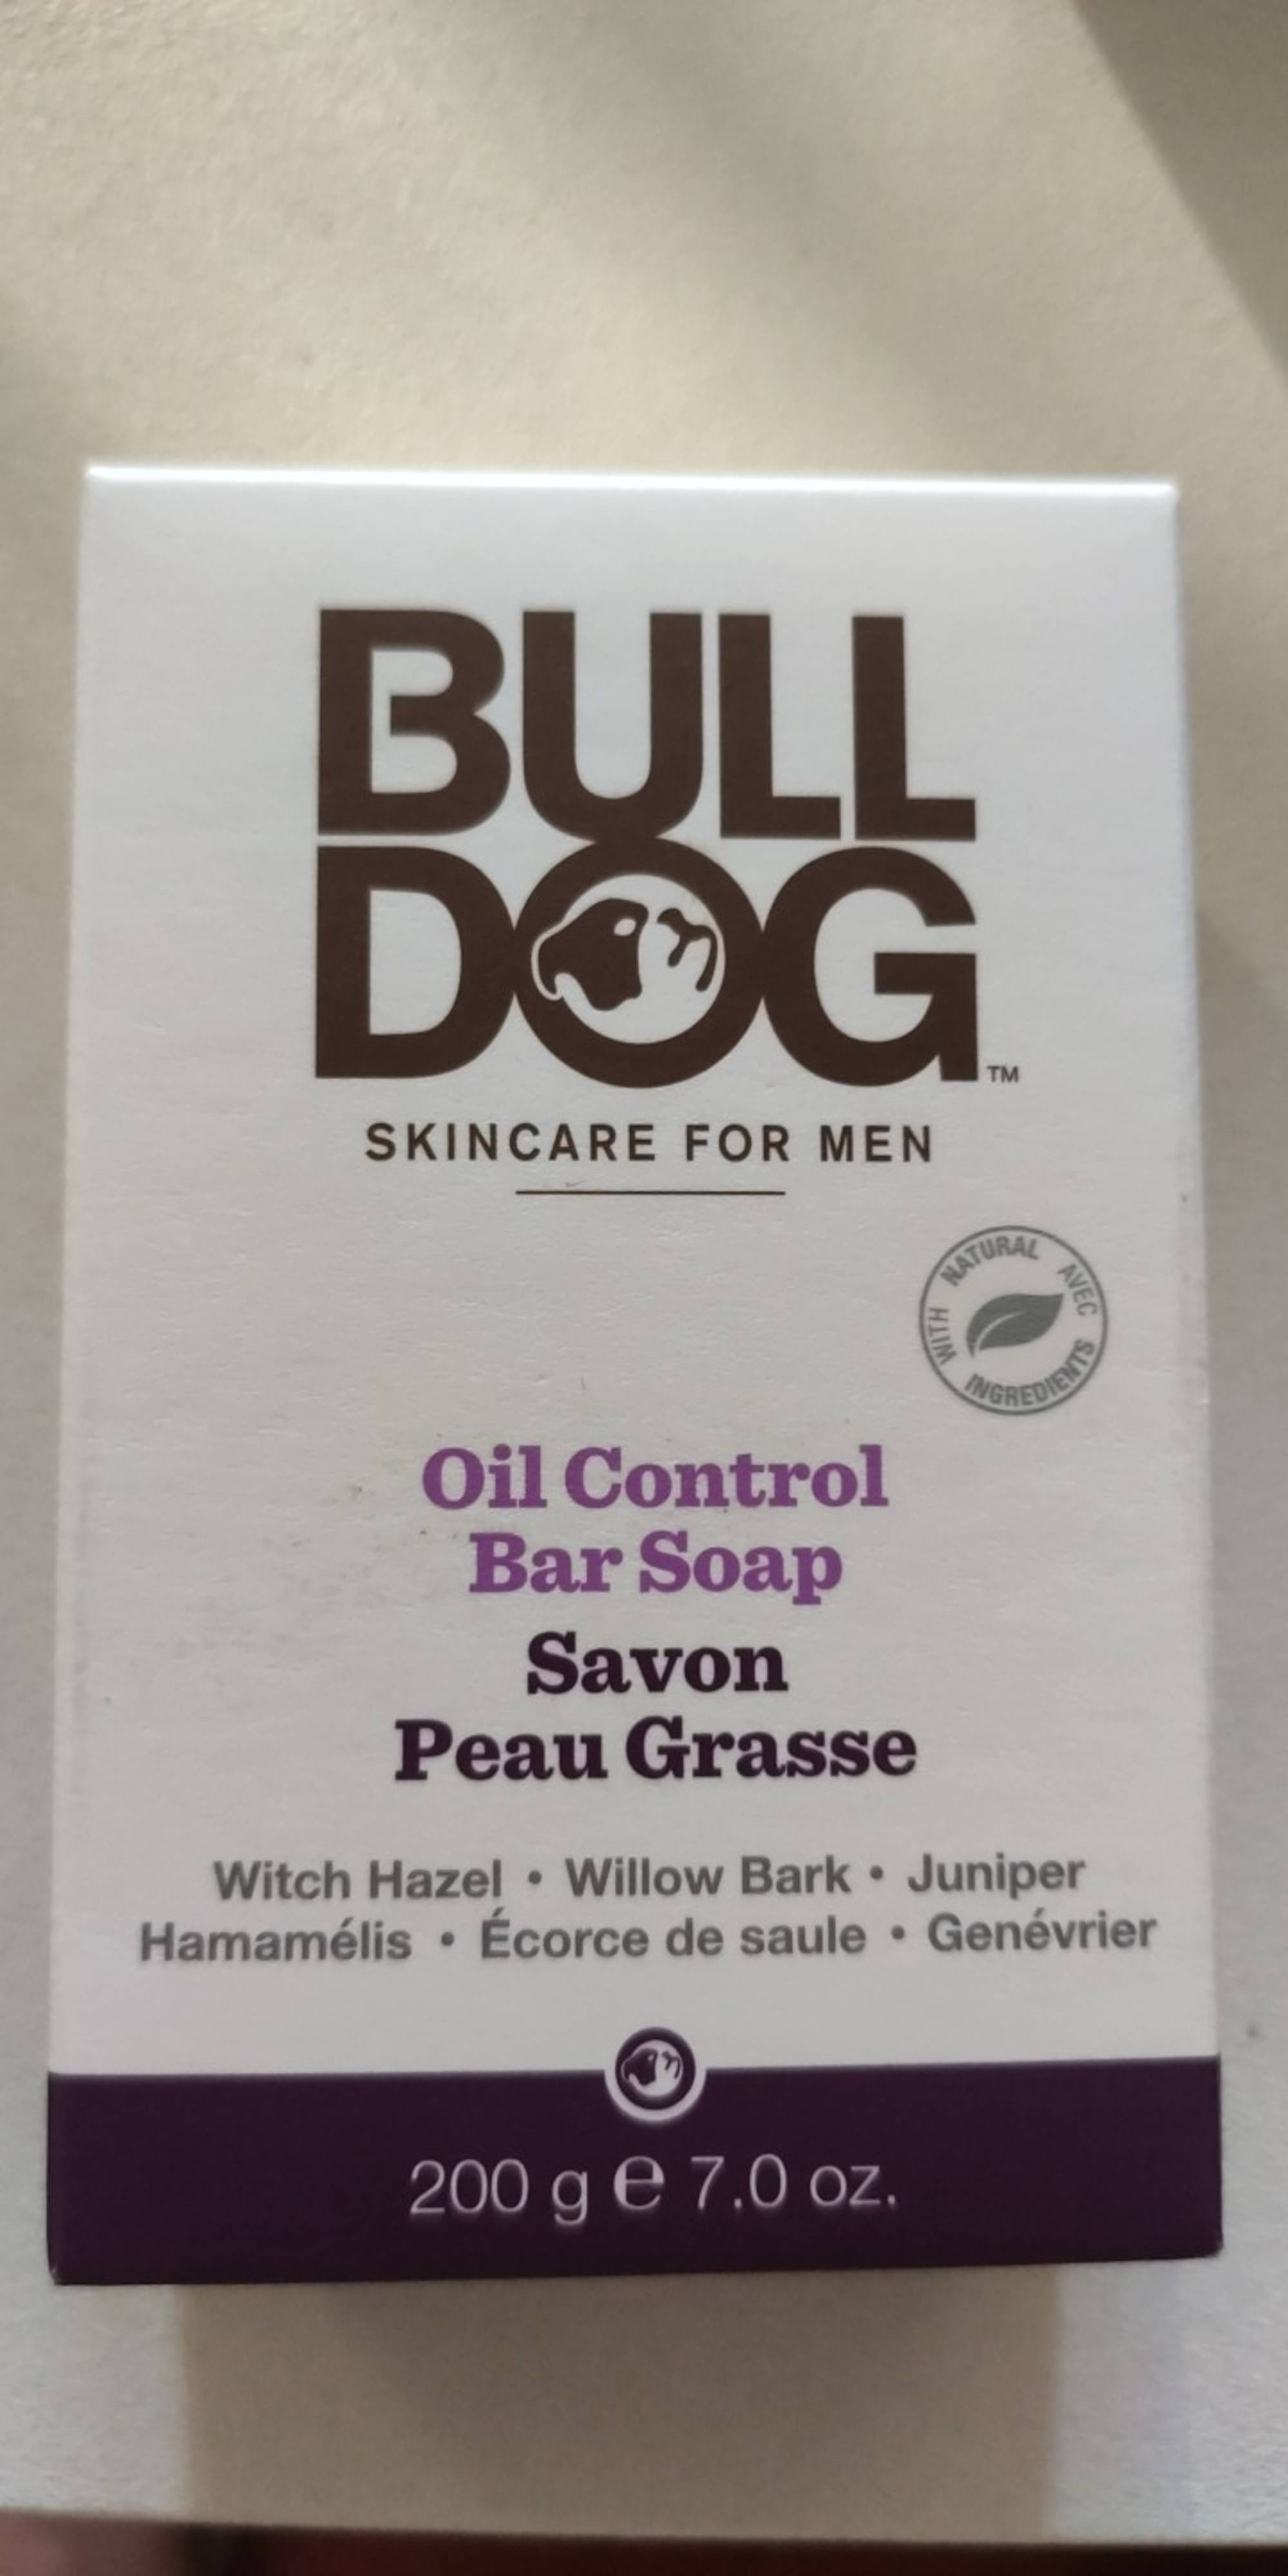 BULLDOG SKINCARE FOR MEN - Peau grasse - Savon